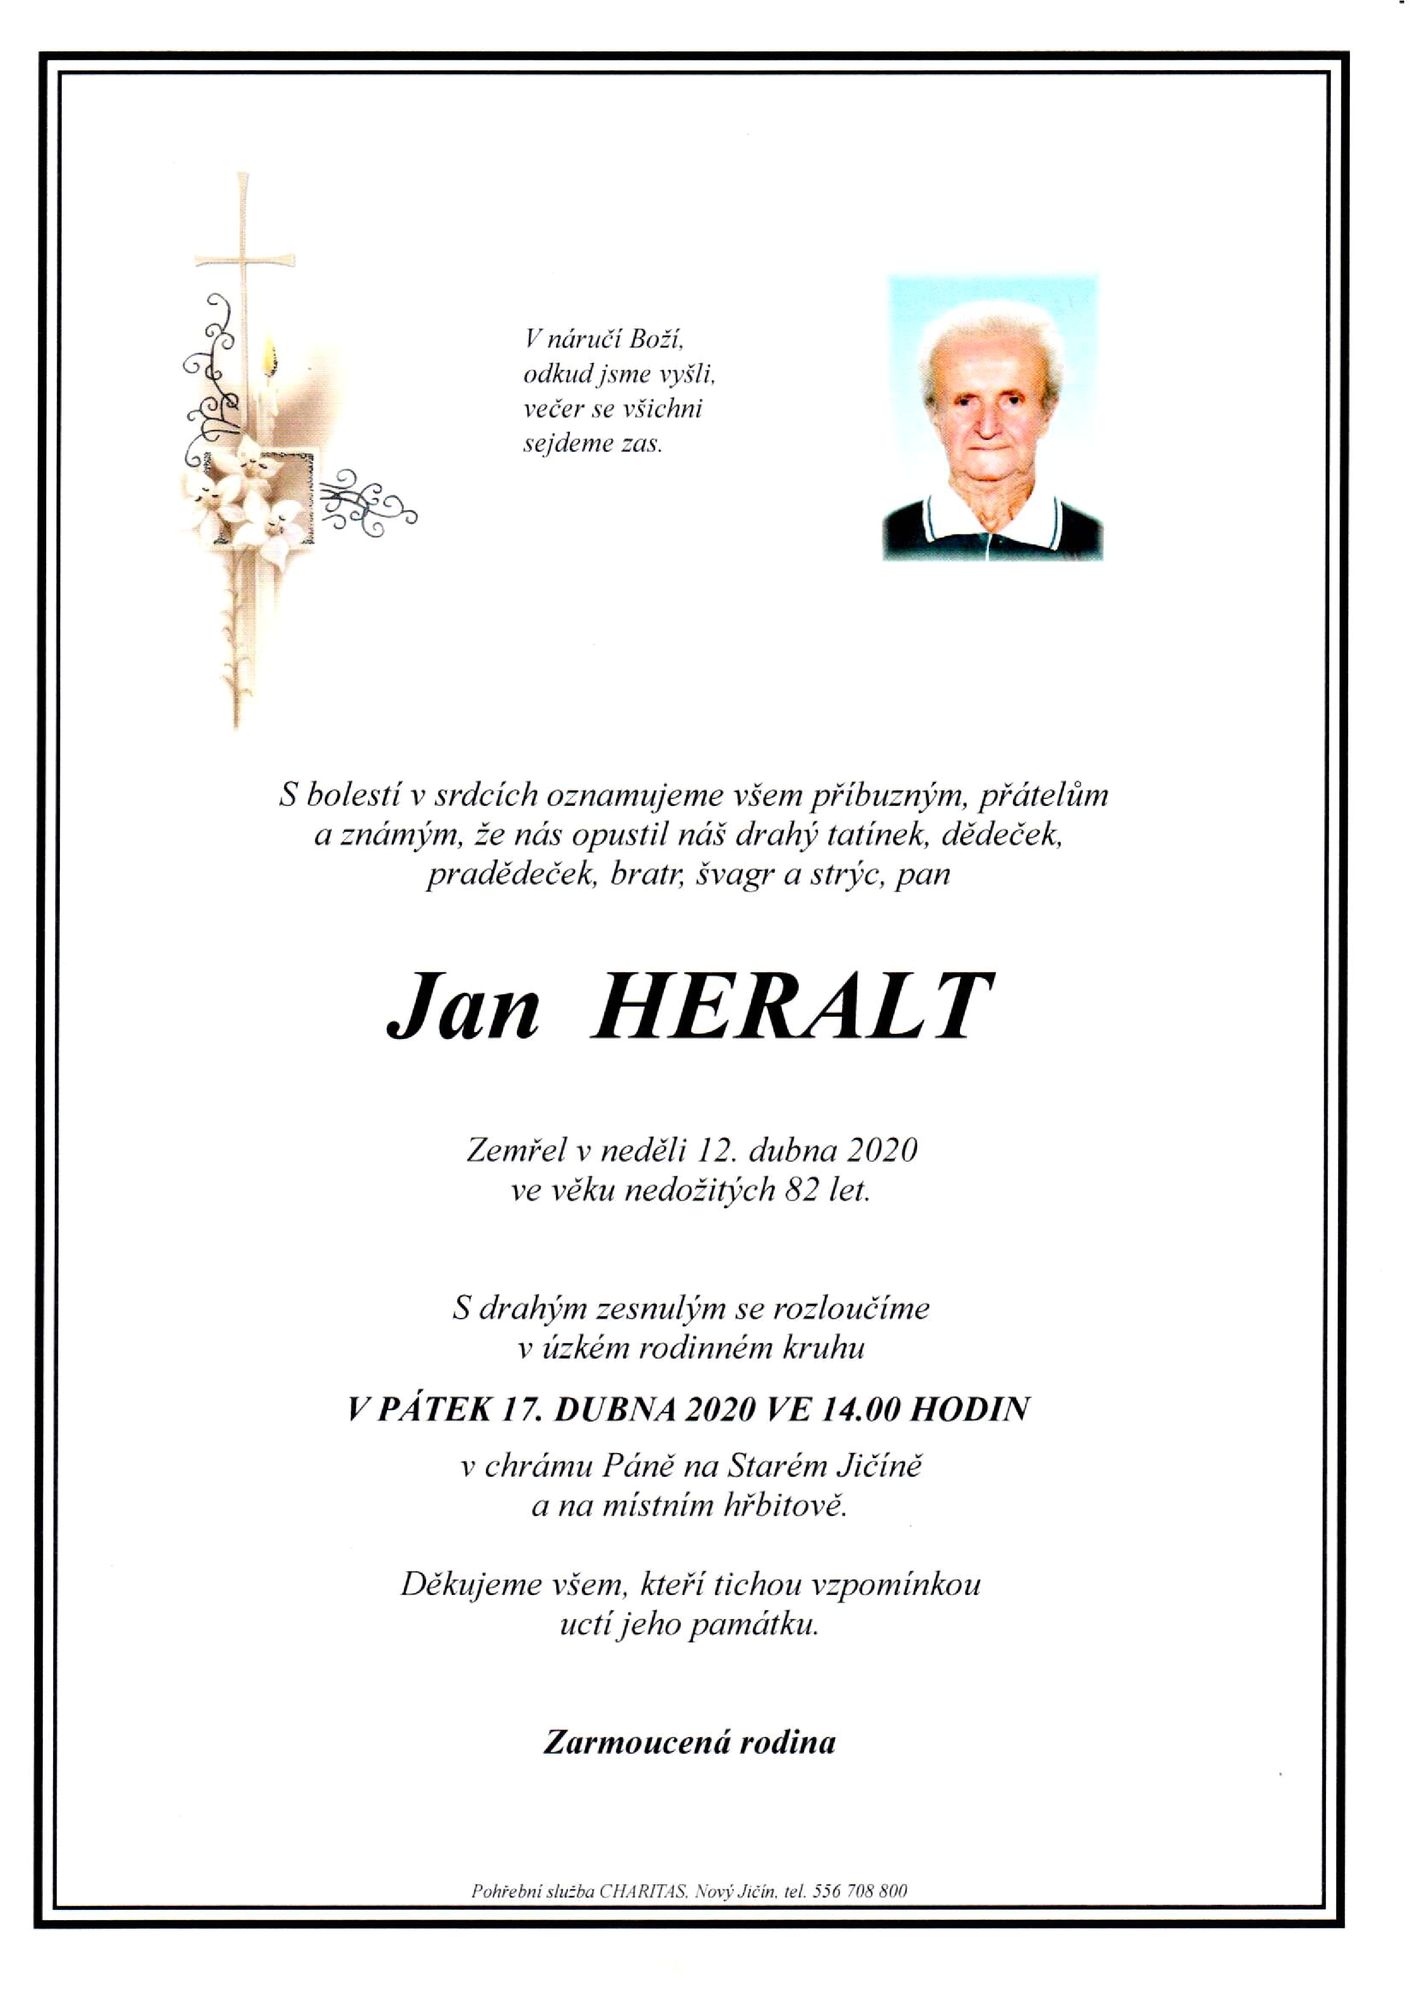 Jan Heralt